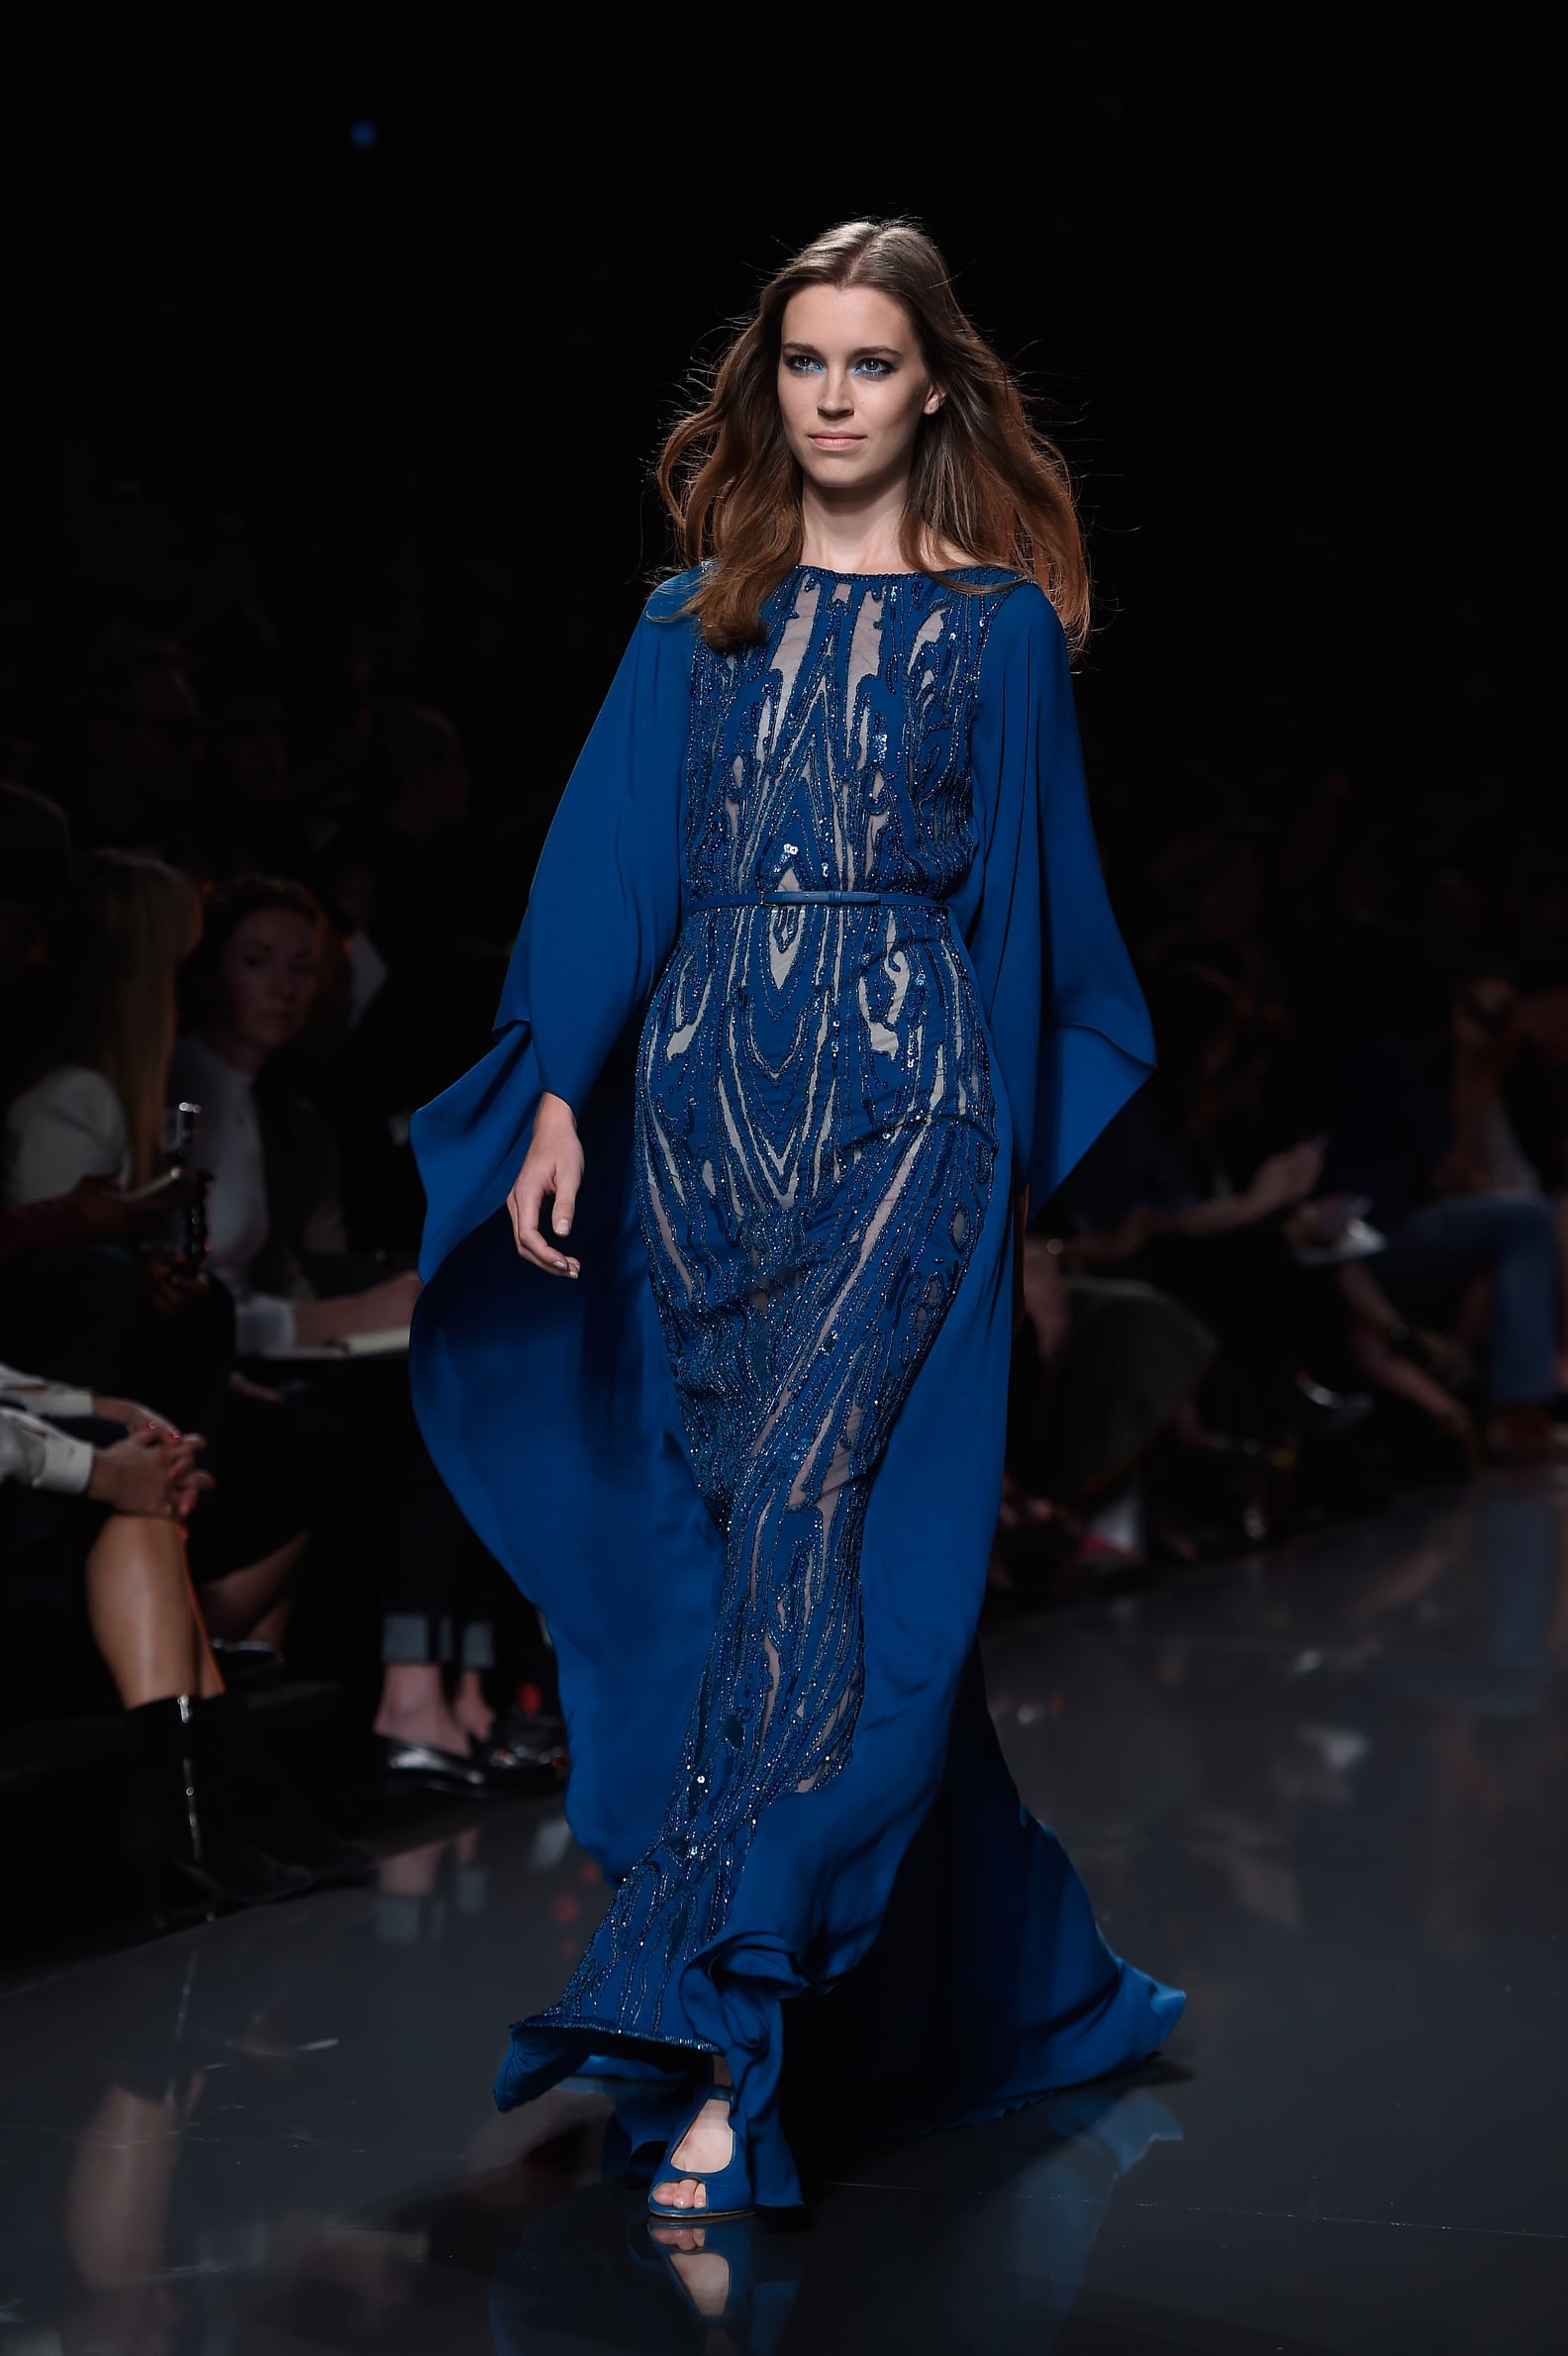 Elie Saab Spring 2015 Show | Paris Fashion Week | POPSUGAR Fashion